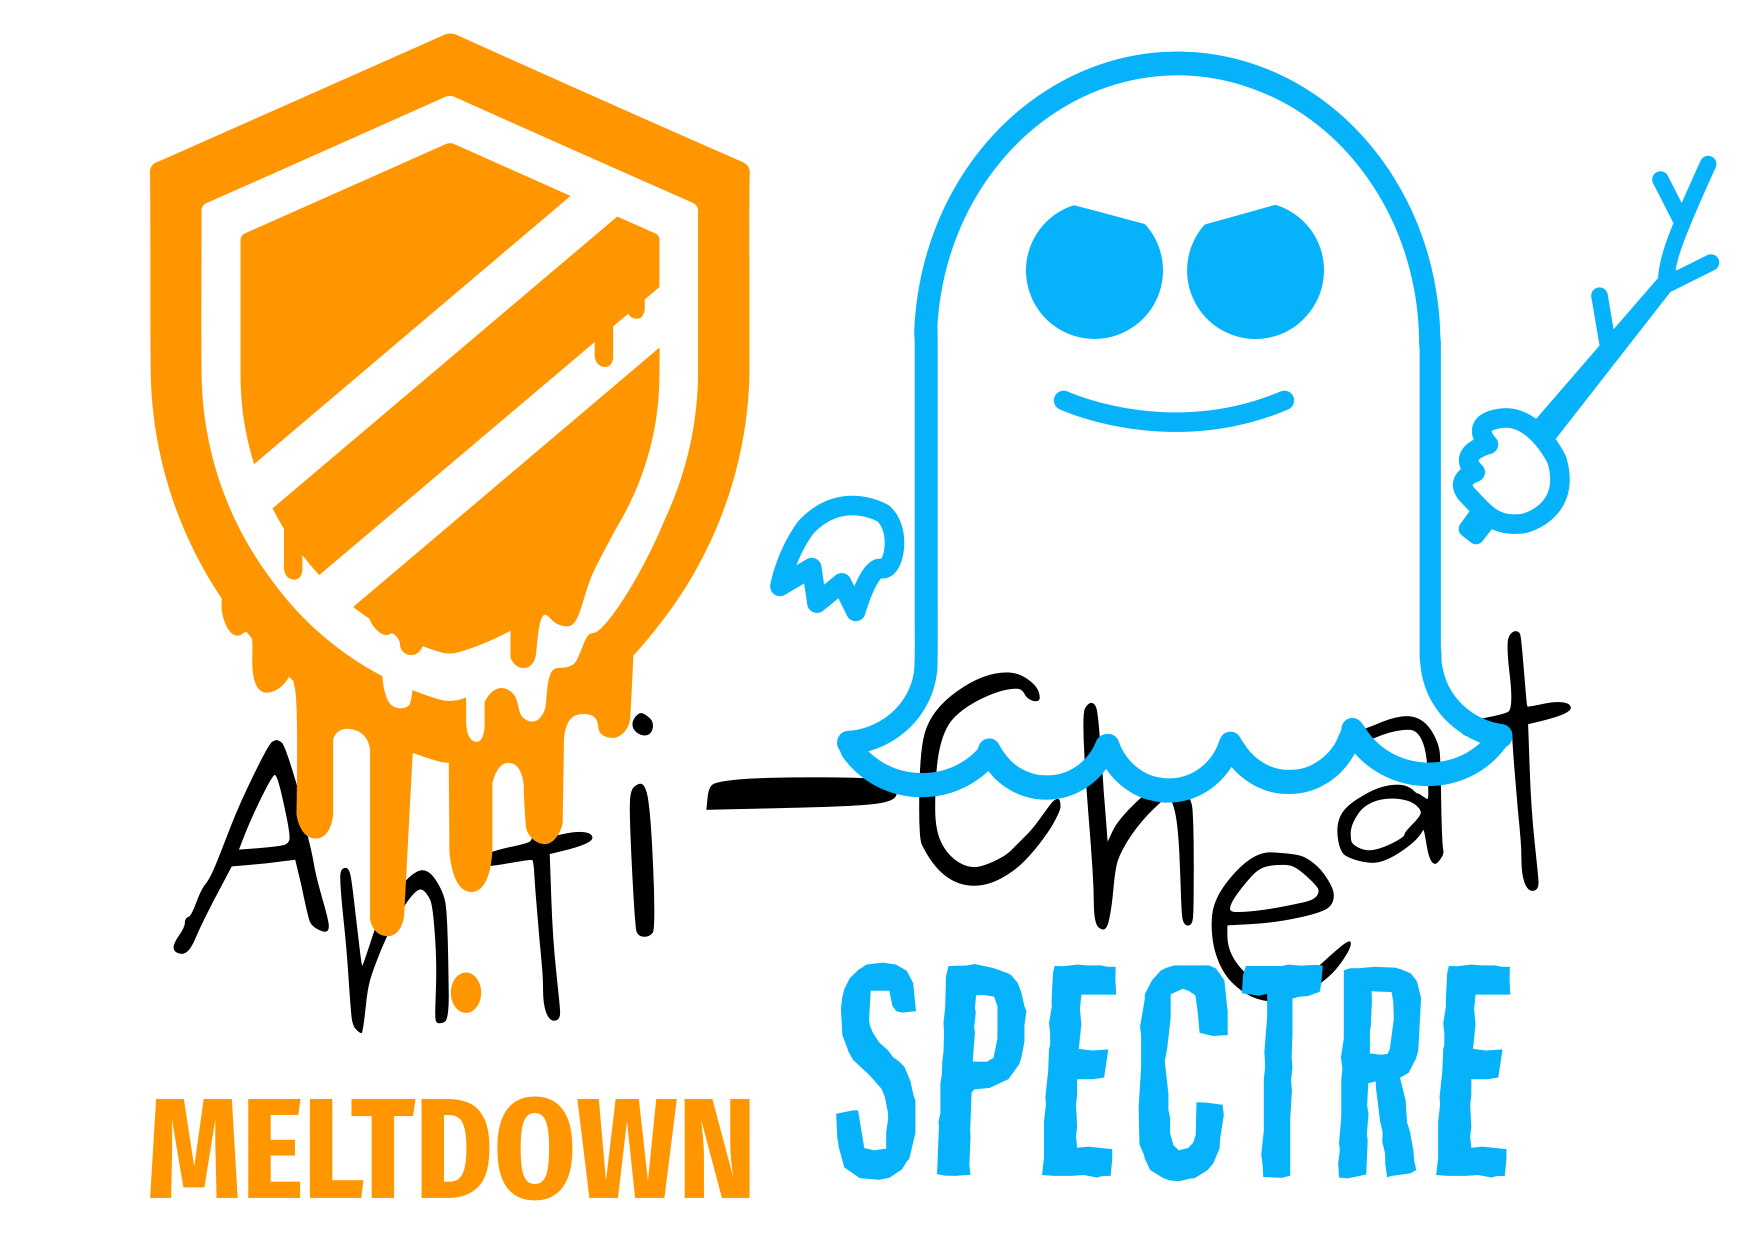 Meltdown and Spectre vs Anti-Cheat